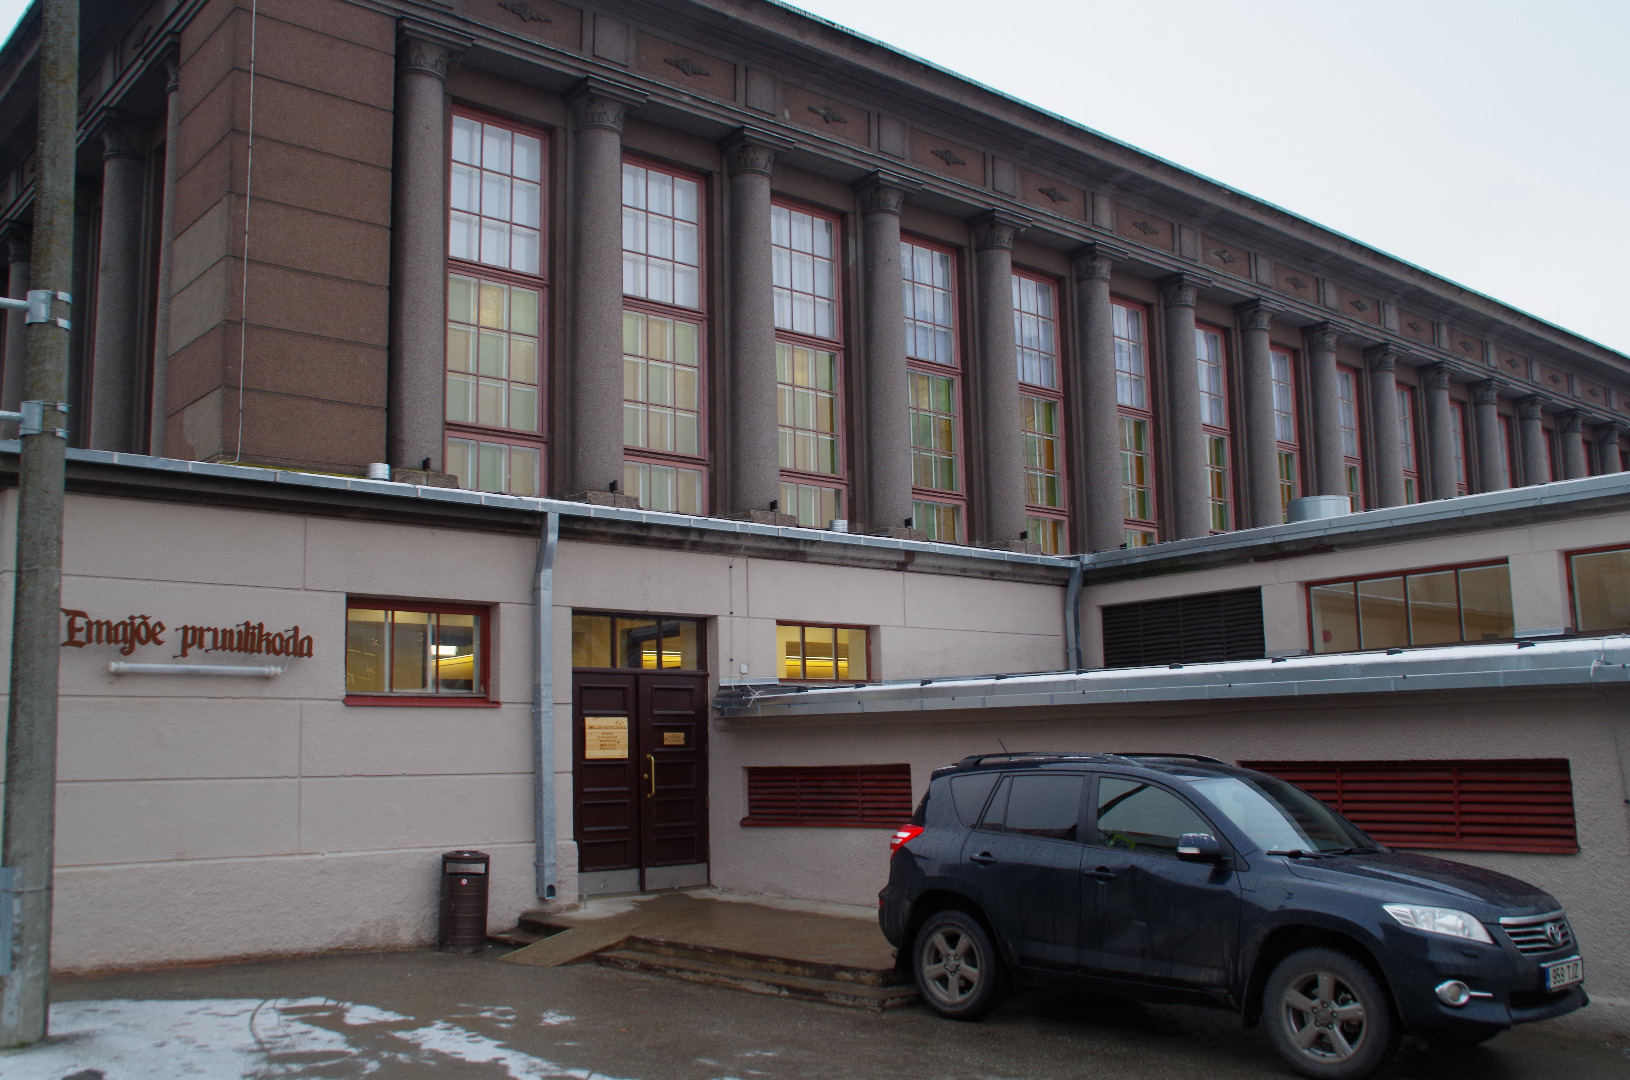 Tartu Market Building (back side) rephoto